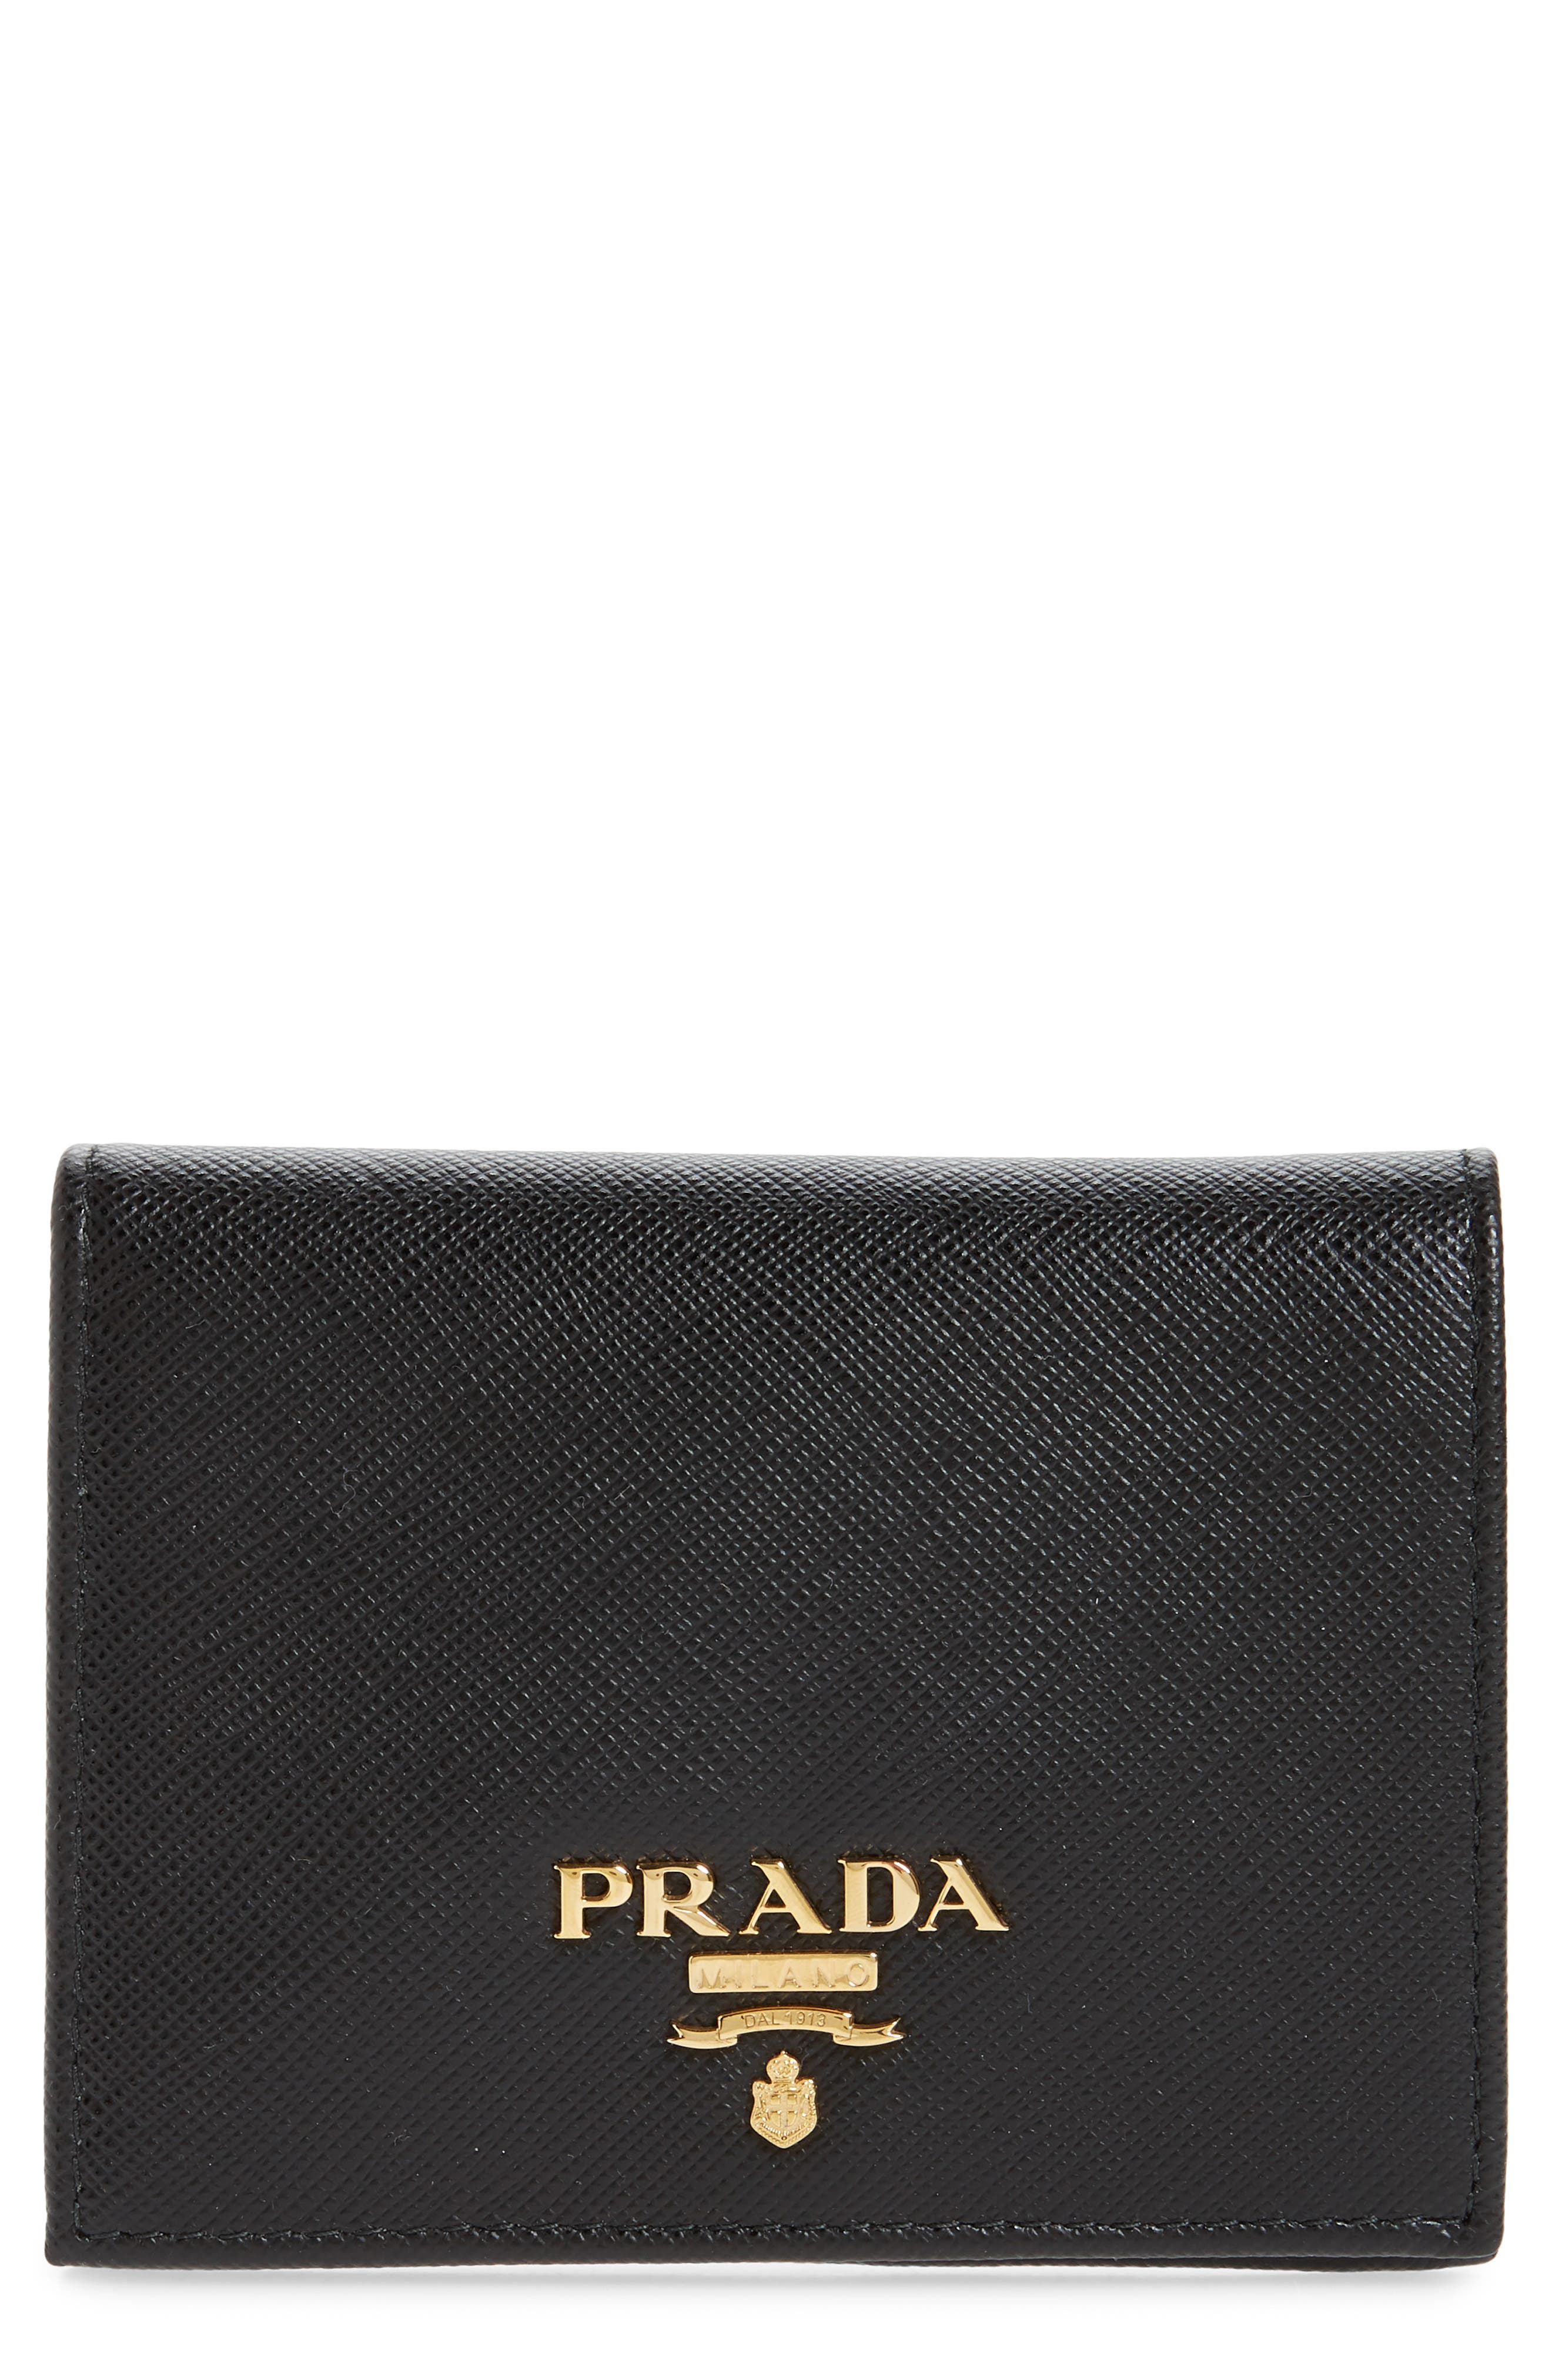 prada wallet size